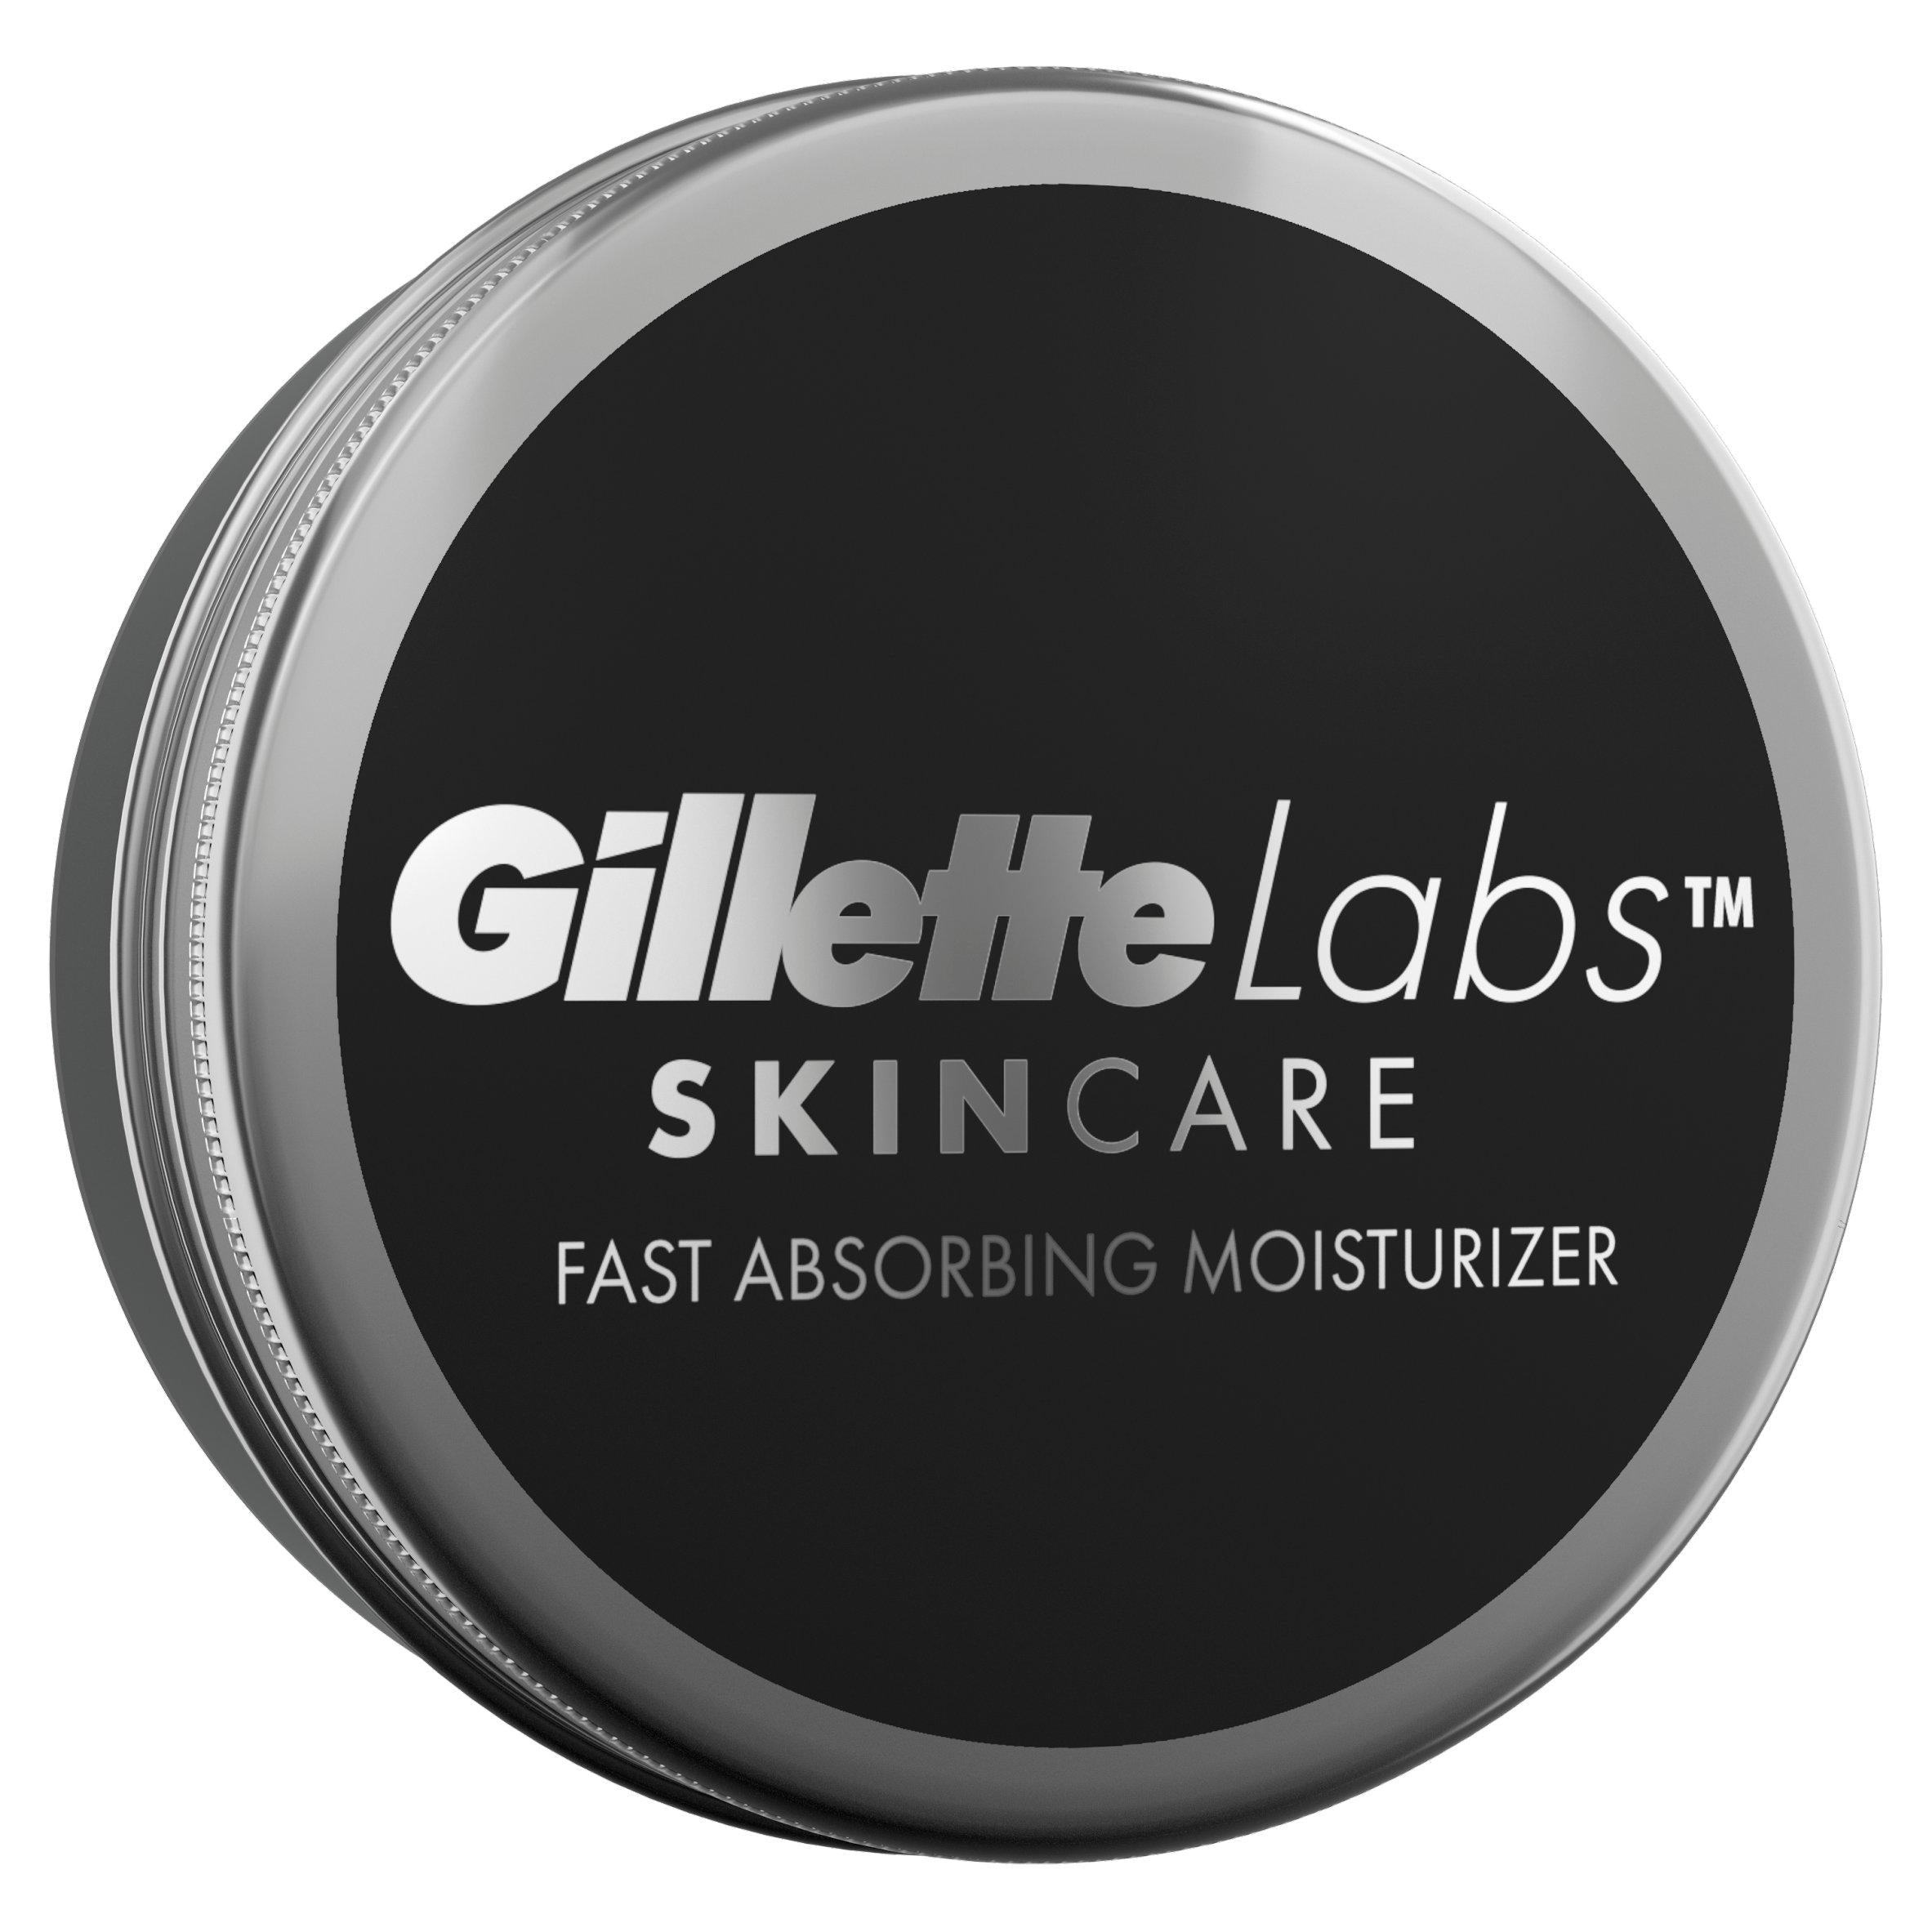 Gillette Labs Skincare Fast Absorbing Moisturiser with Vitamin B3 and Sea Kelp - 100ml